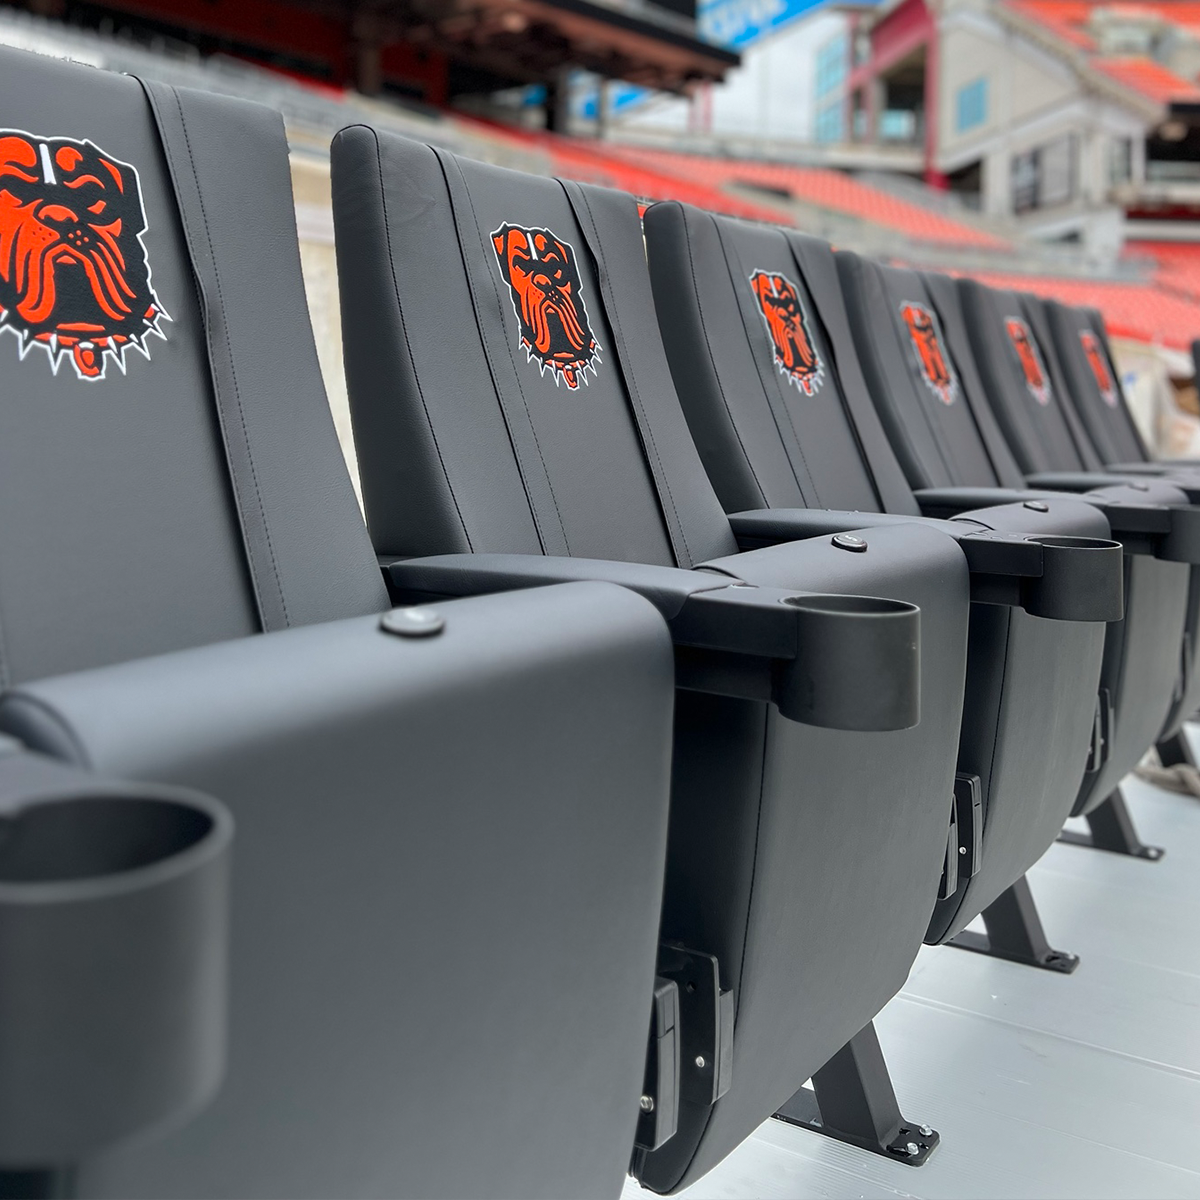 SuiteMax 3.5 VIP Seats with Miami Heat Team Commemorative Logo